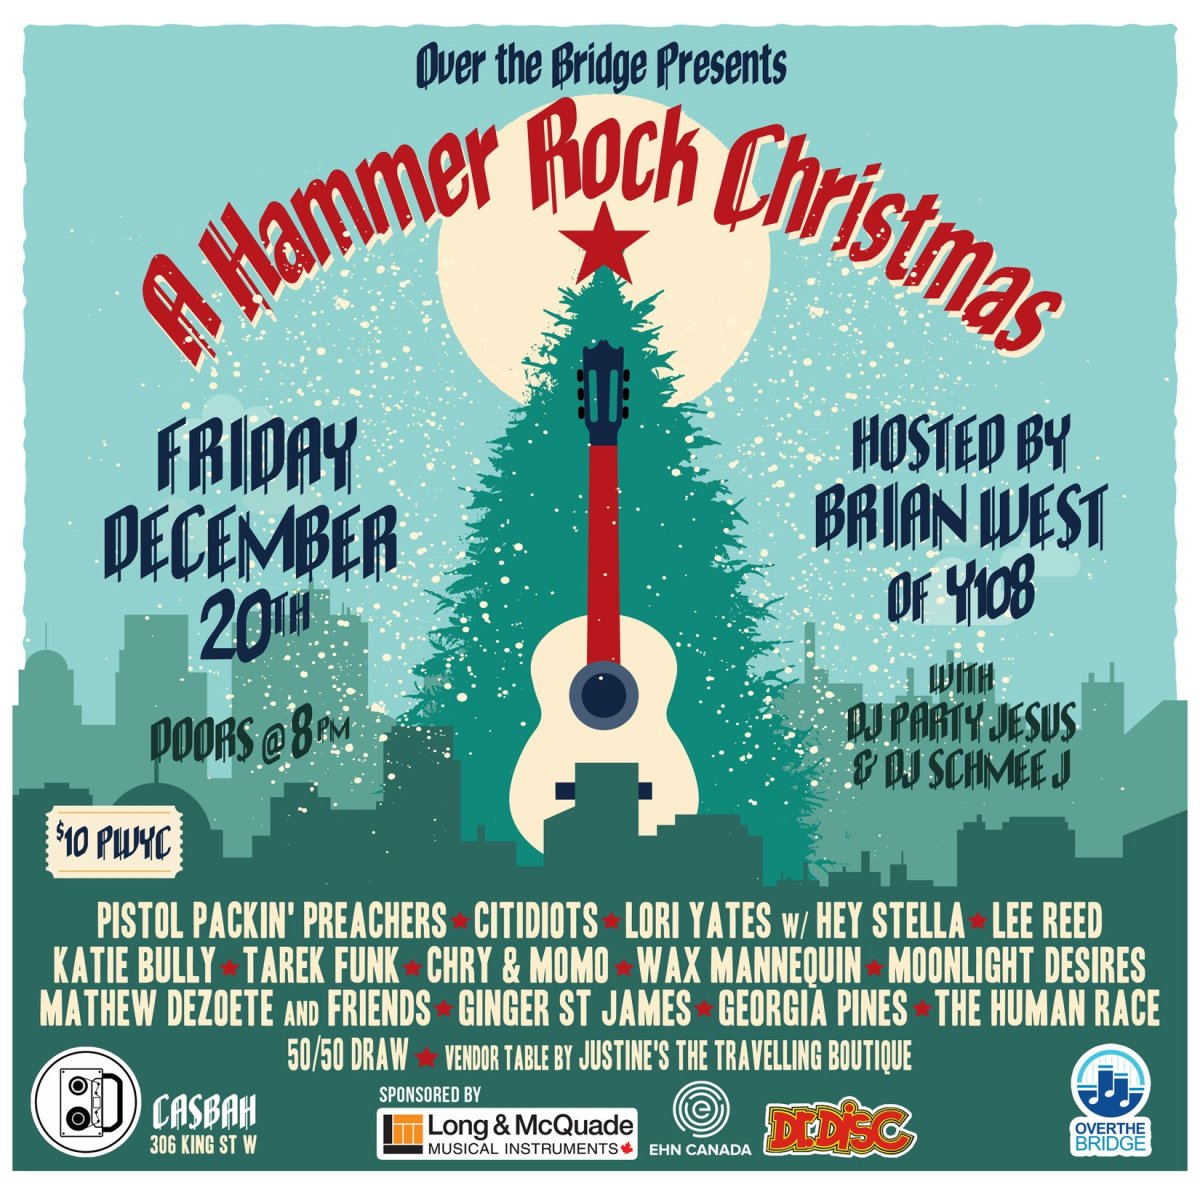 A Hammer Rock Christmas - image